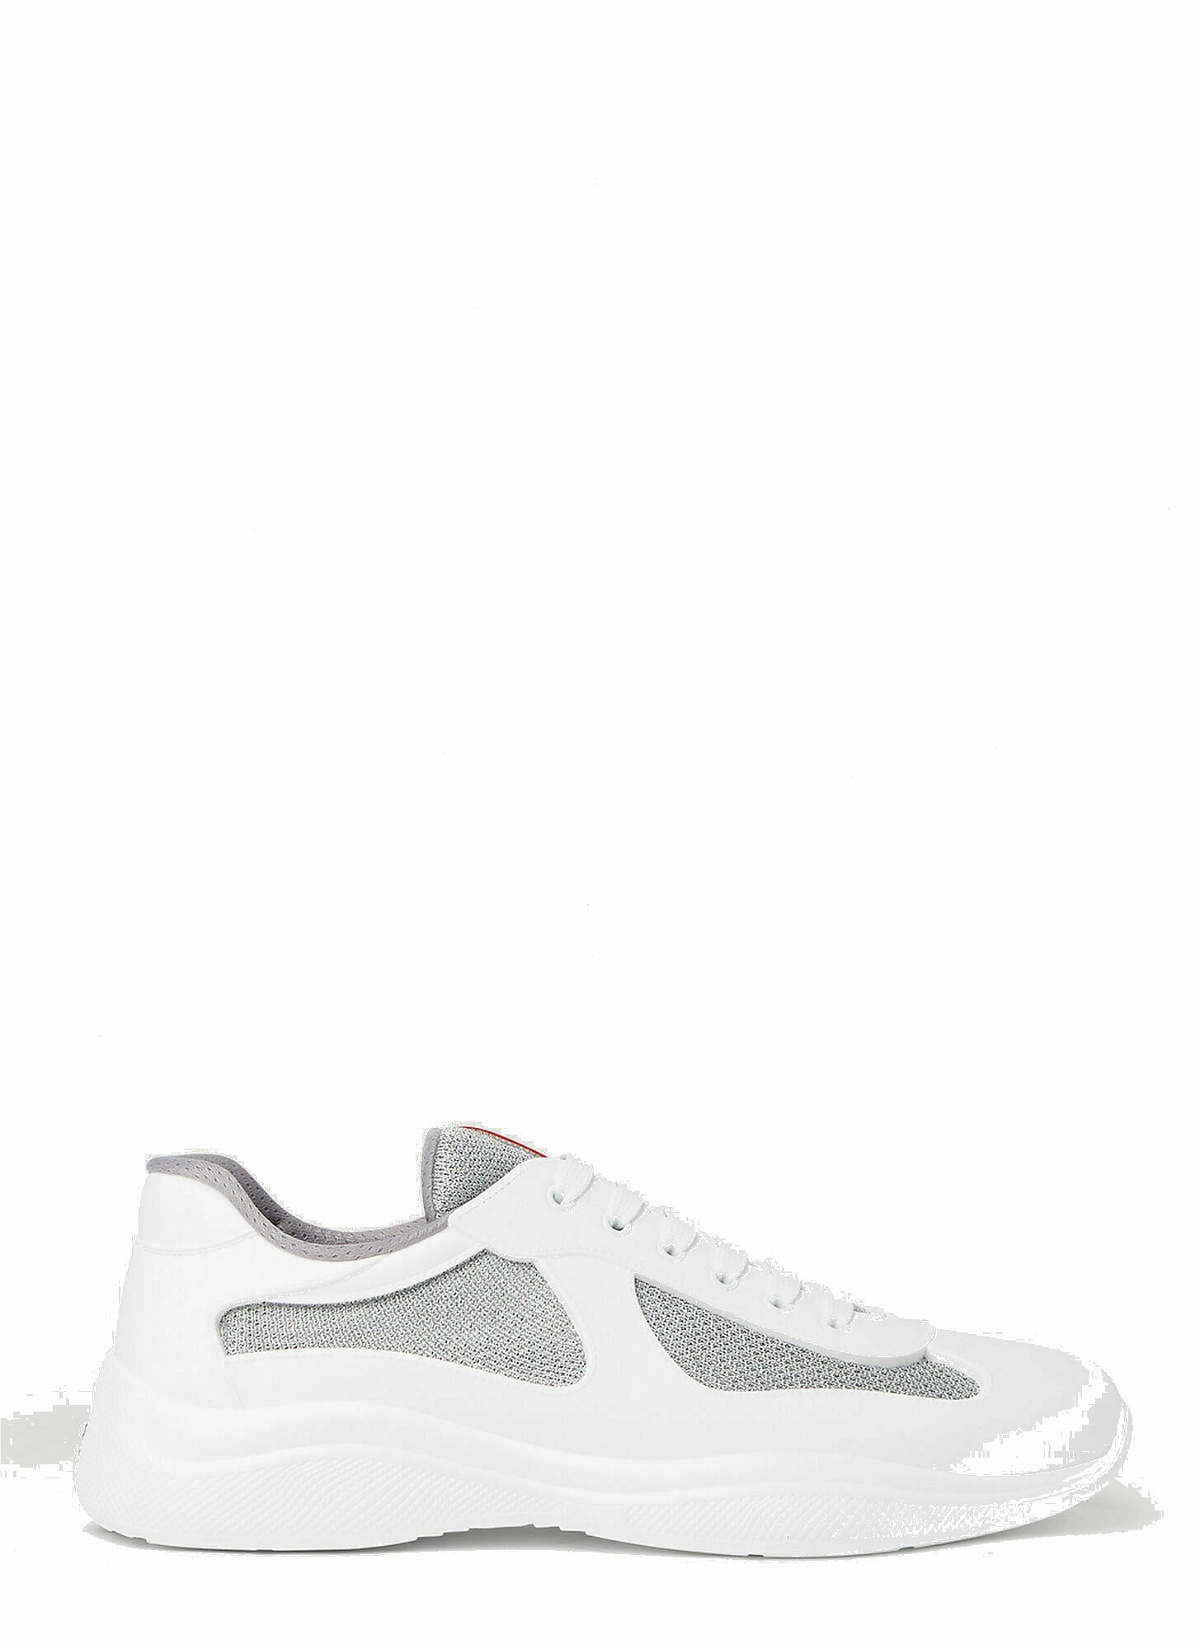 Photo: Prada - Prada America’s Cup Sneakers in White